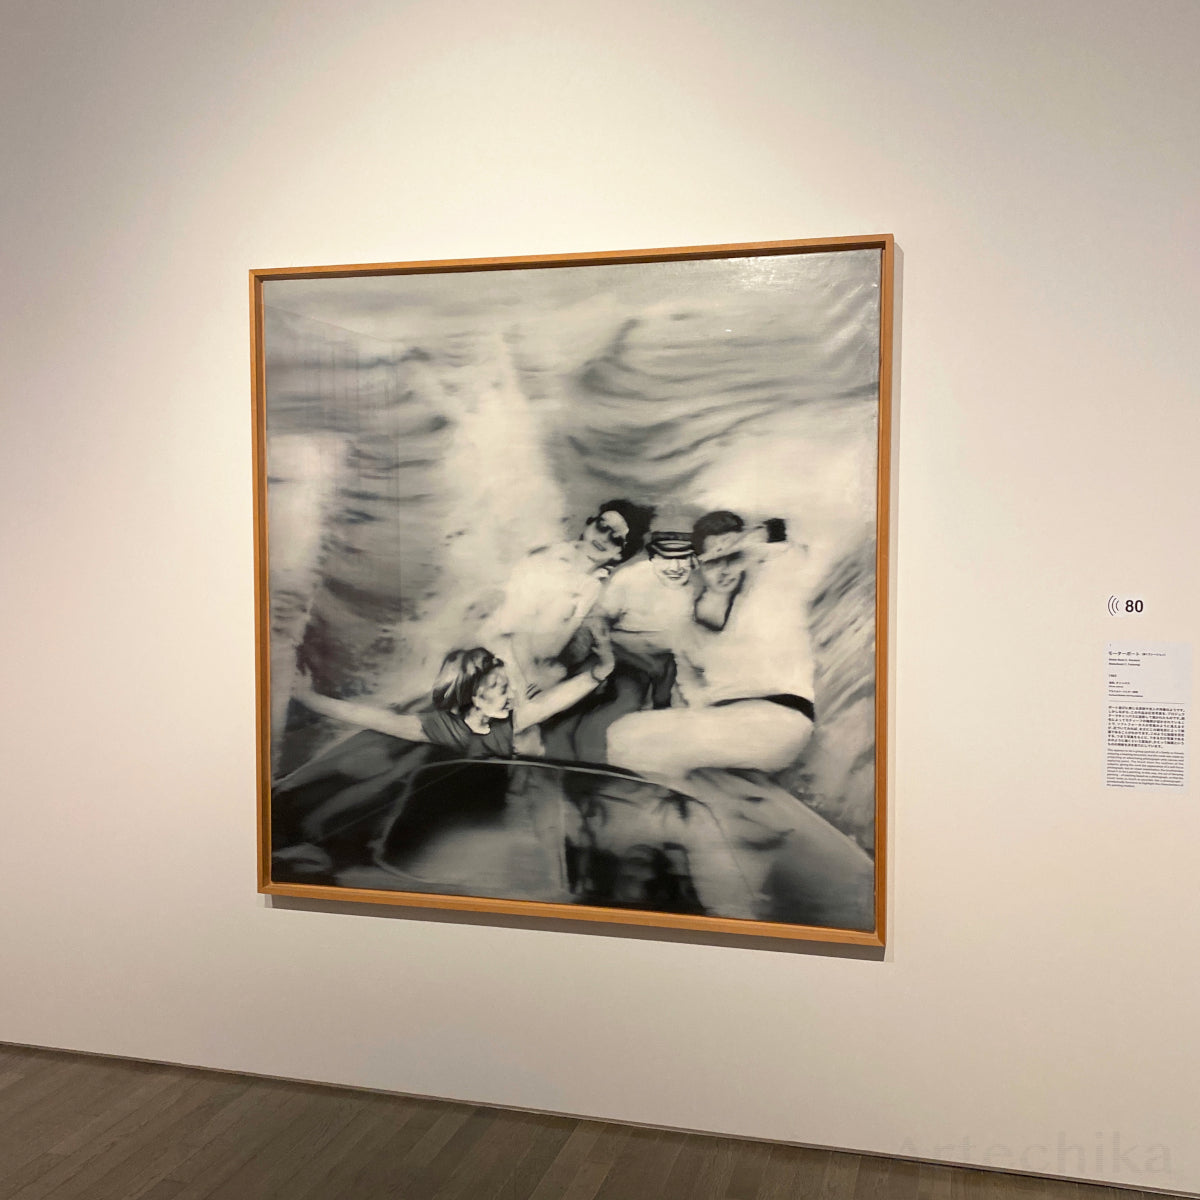 Gerhard Richter モーターボート 1st ヴァージョン Poster